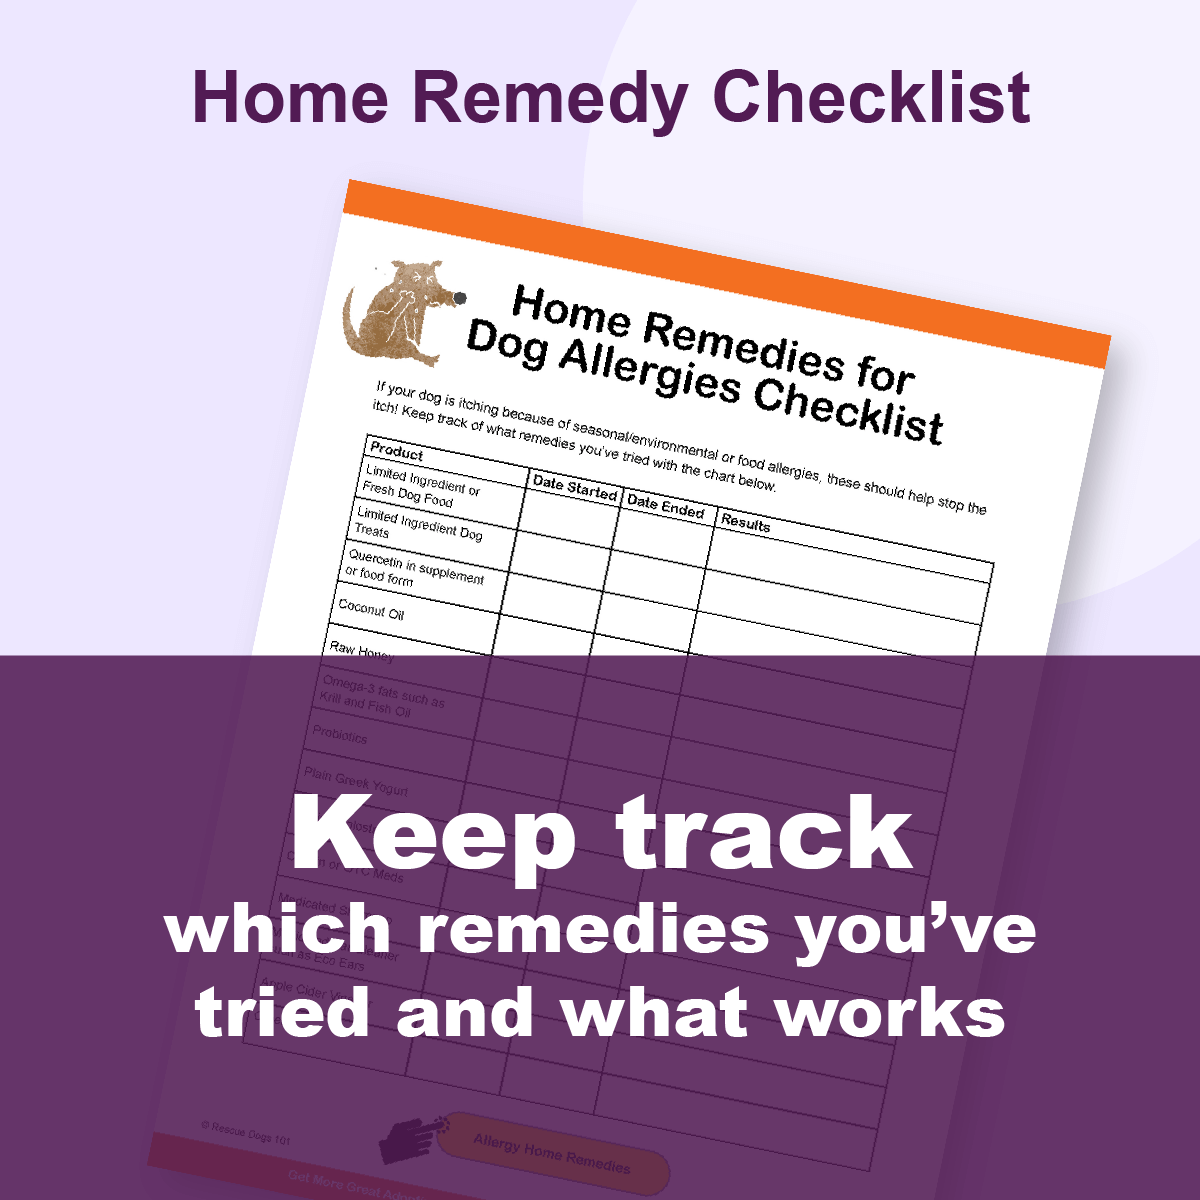 home remedy checklist for dog allergies checklist